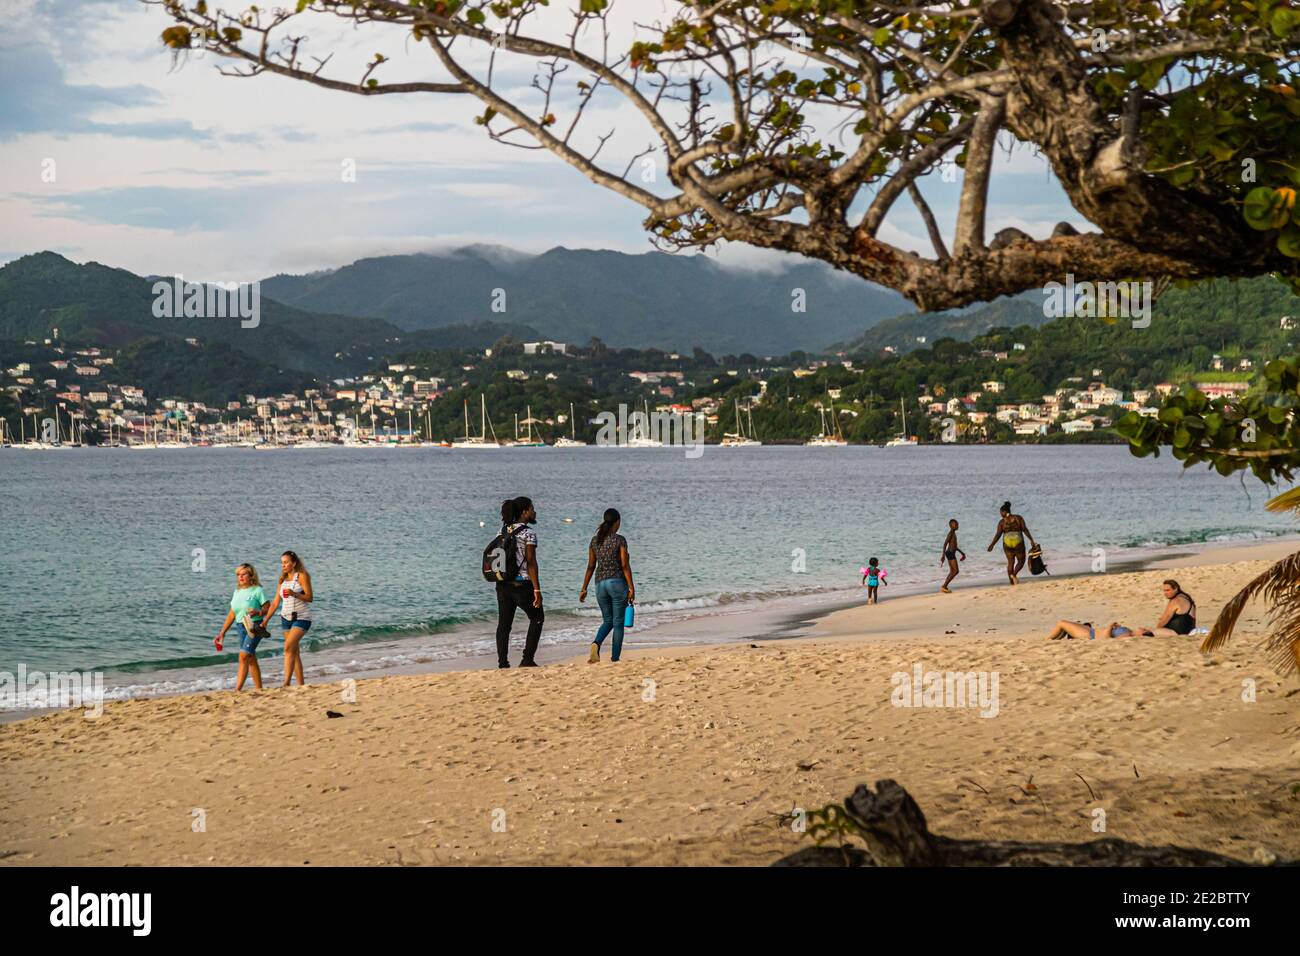 Spice Island Beach Resort am Grand Anse Beach in The Lime, Grenada Stockfoto